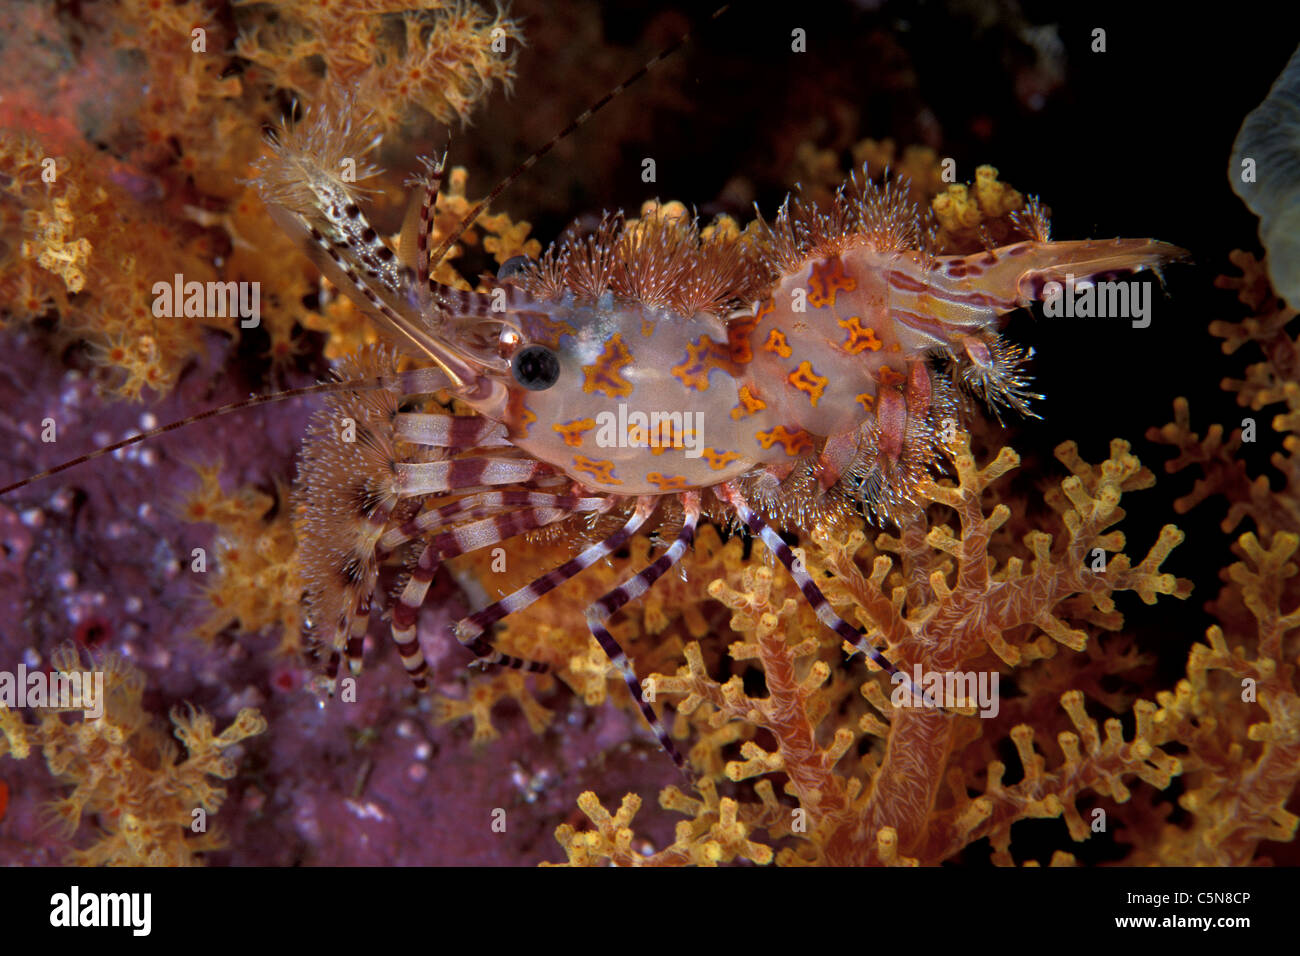 Marble Shrimp, Saron sp.2, Vitu Islands, Bismarck Archipelago, Papua New Guinea Stock Photo